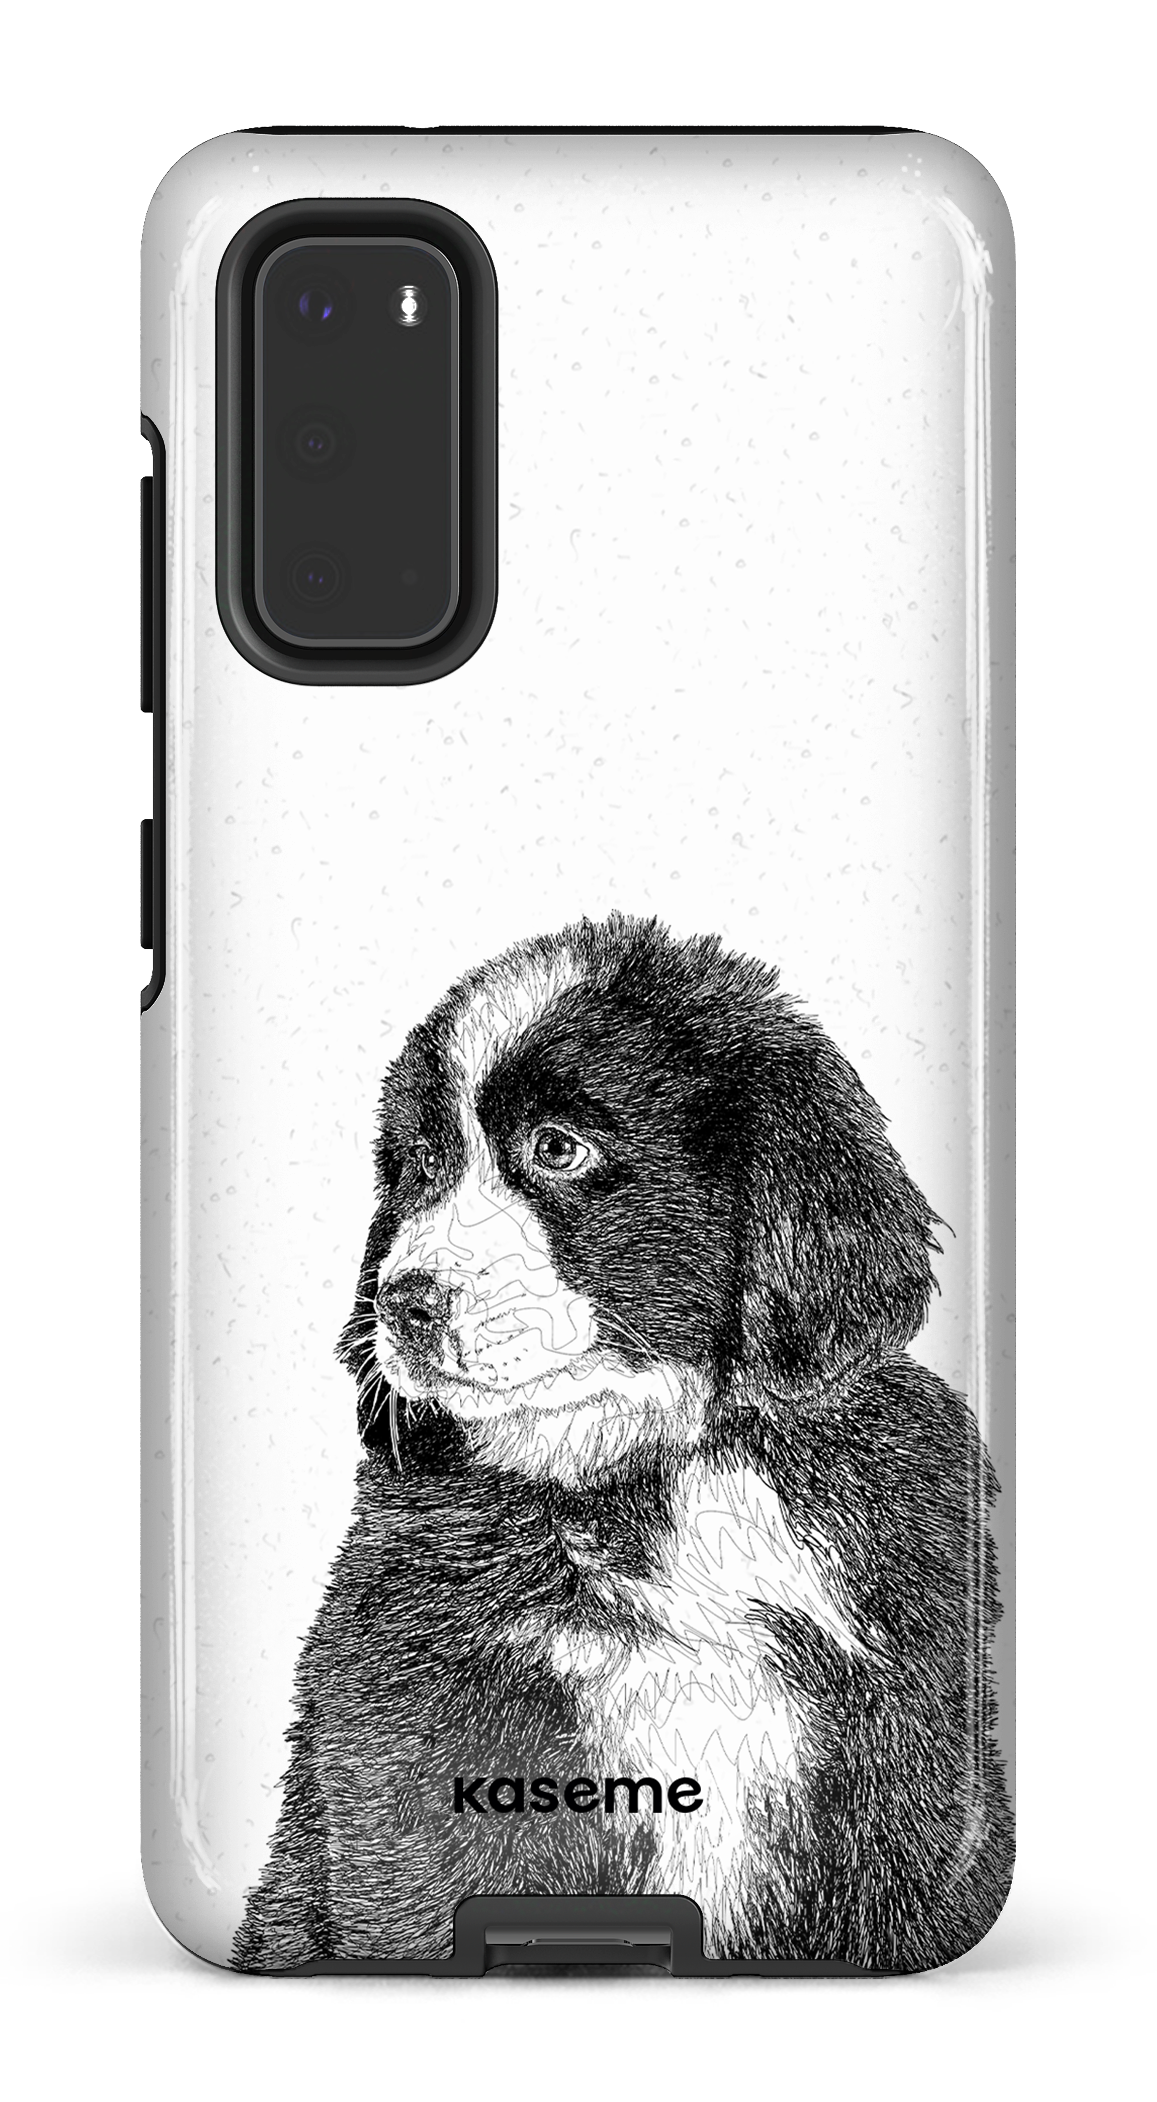 Bernese Mountain Dog - Galaxy S20